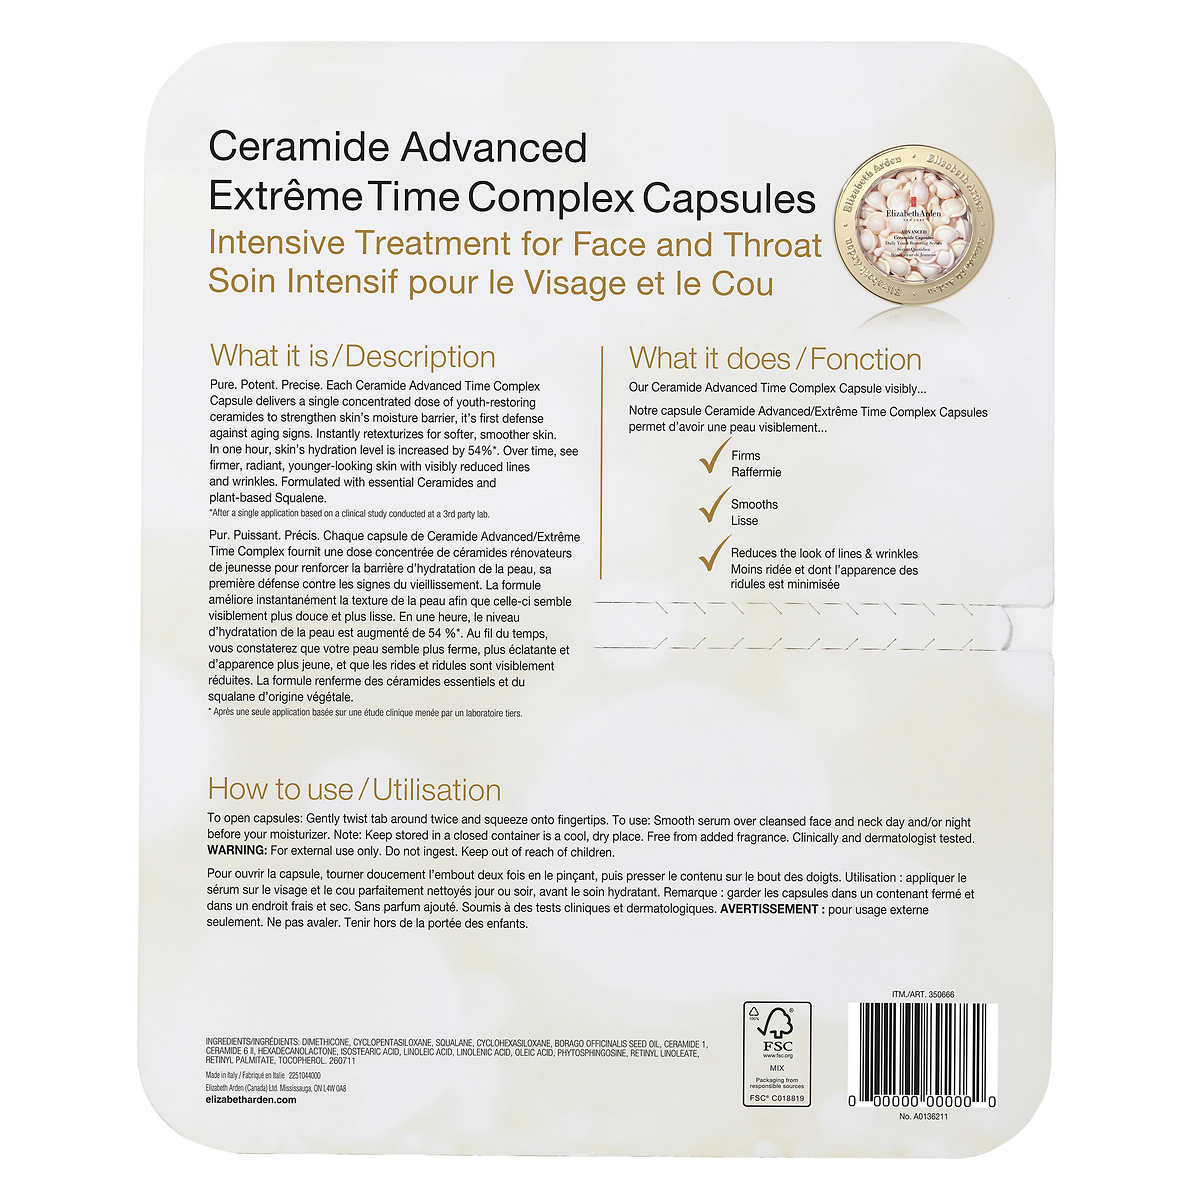 Elizabeth Arden Ceramide Advanced Time Complex Capsules